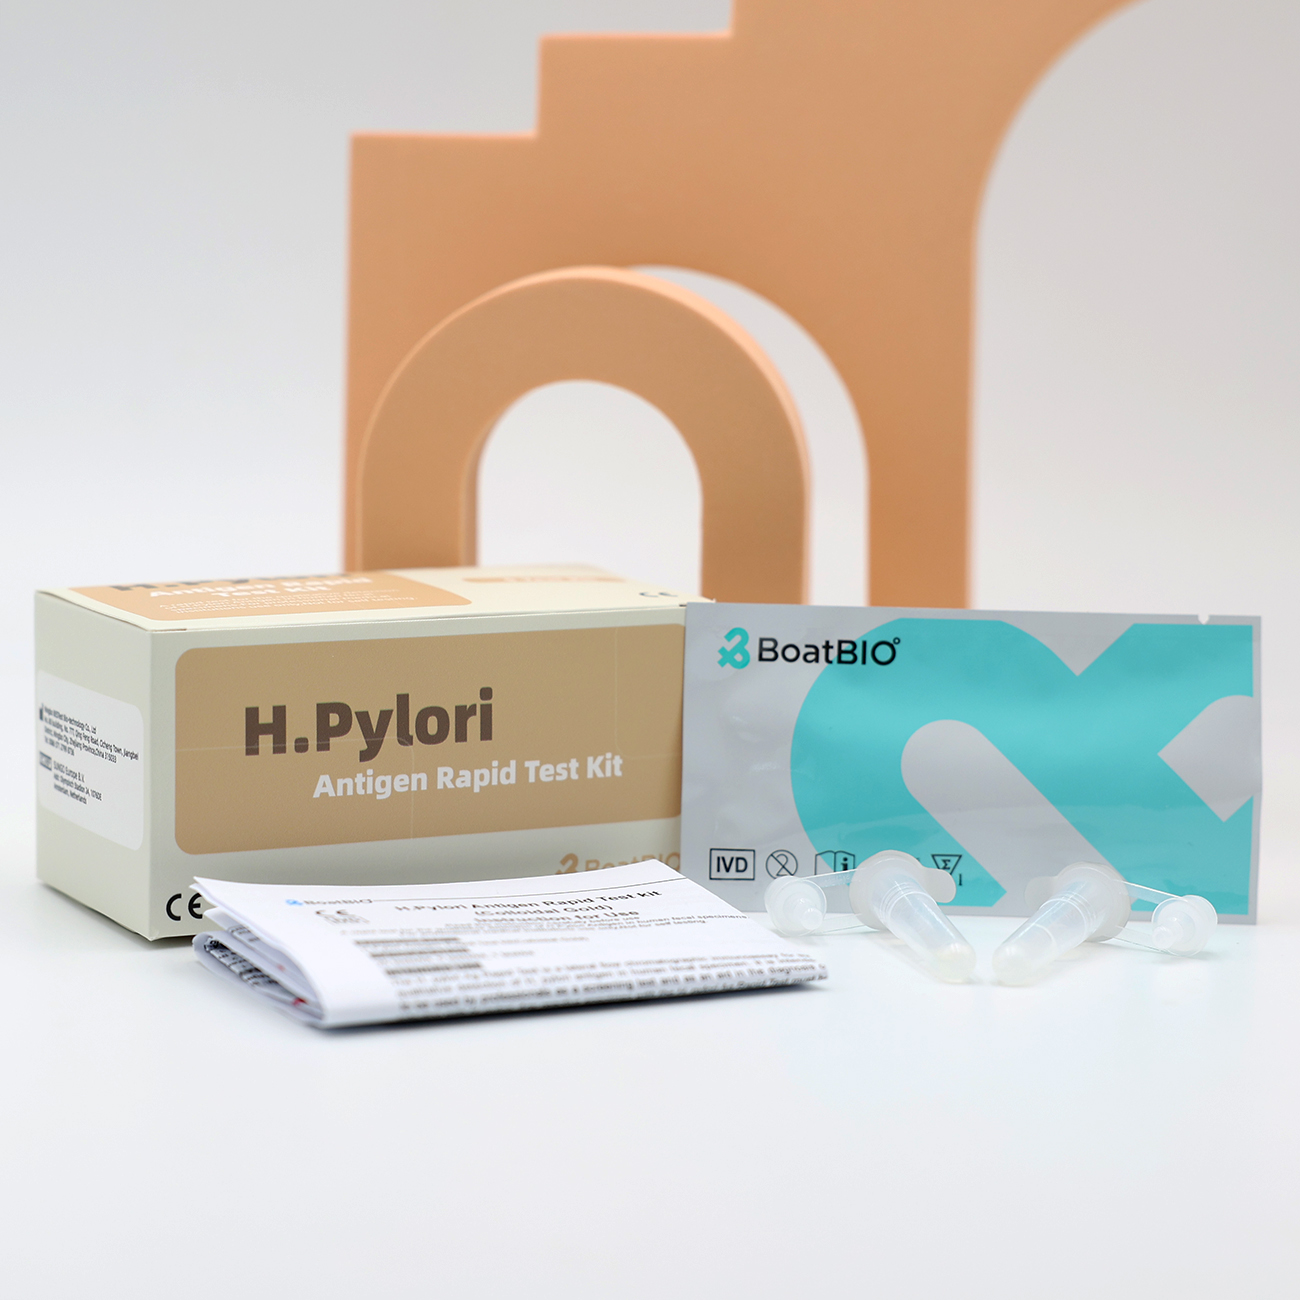 H. Pylori Antigen Rapid Test Kit